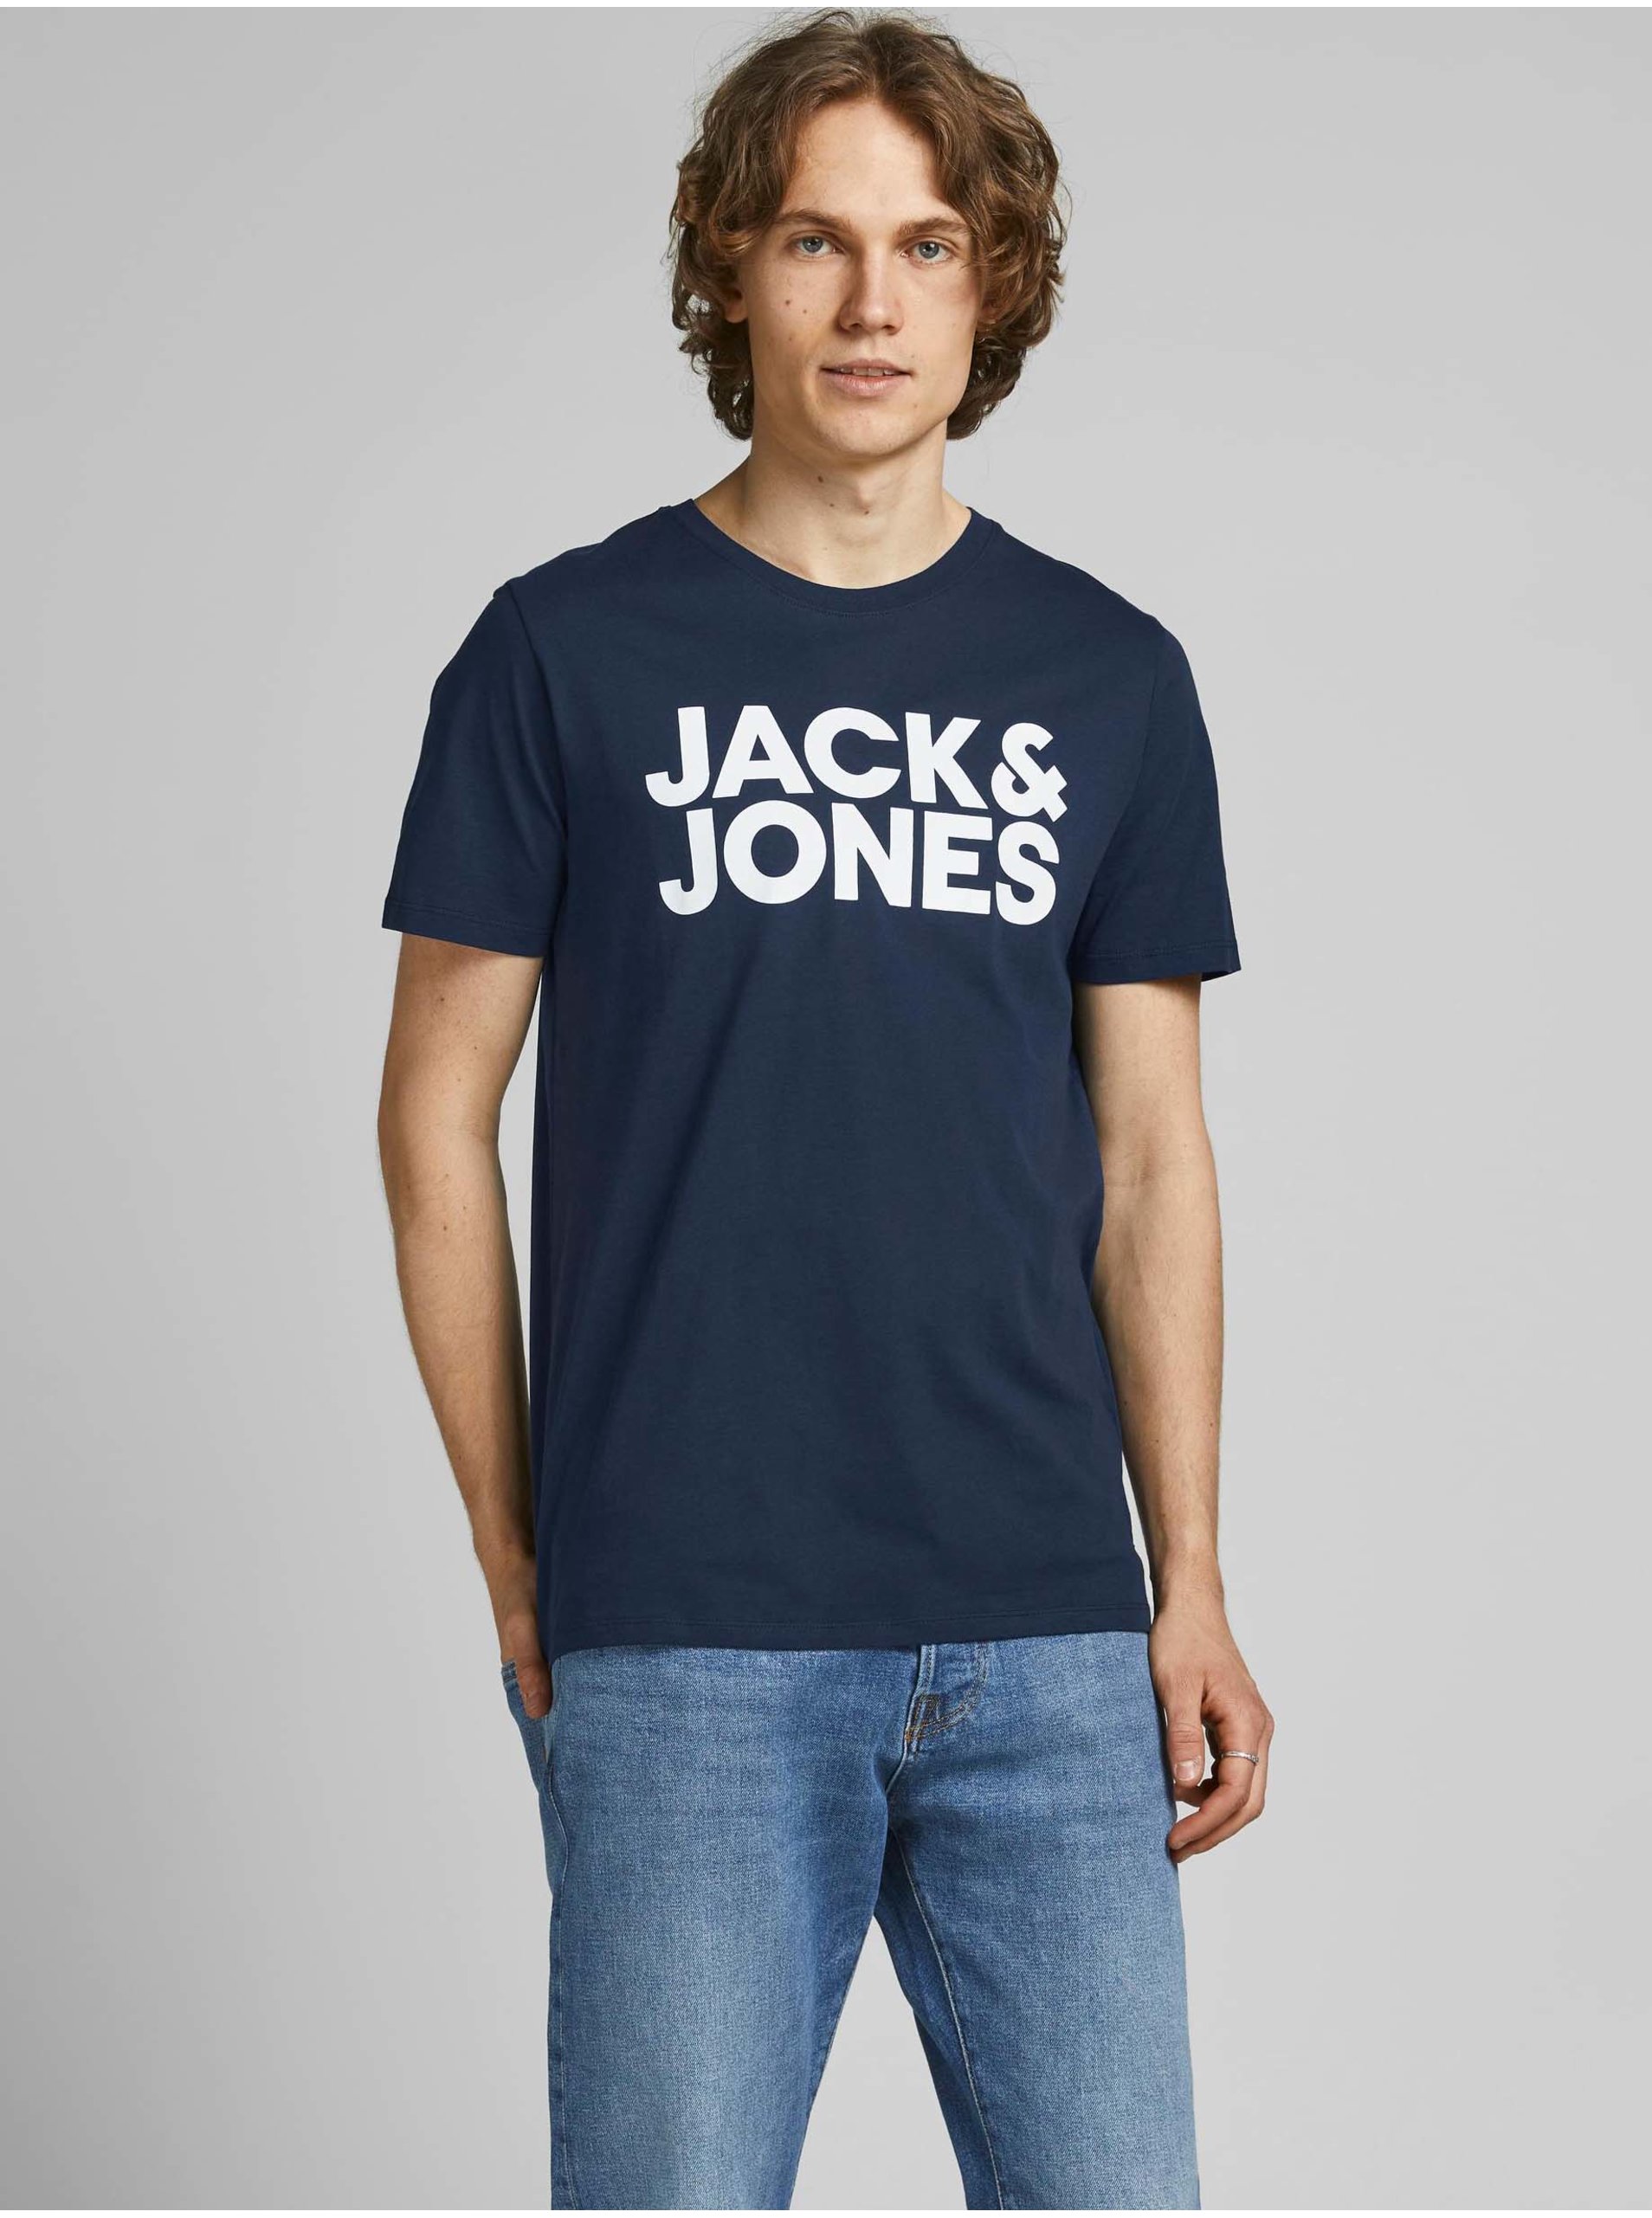 Lacno Tmavomodré slim fit tričko s potlačou Jack & Jones Corp